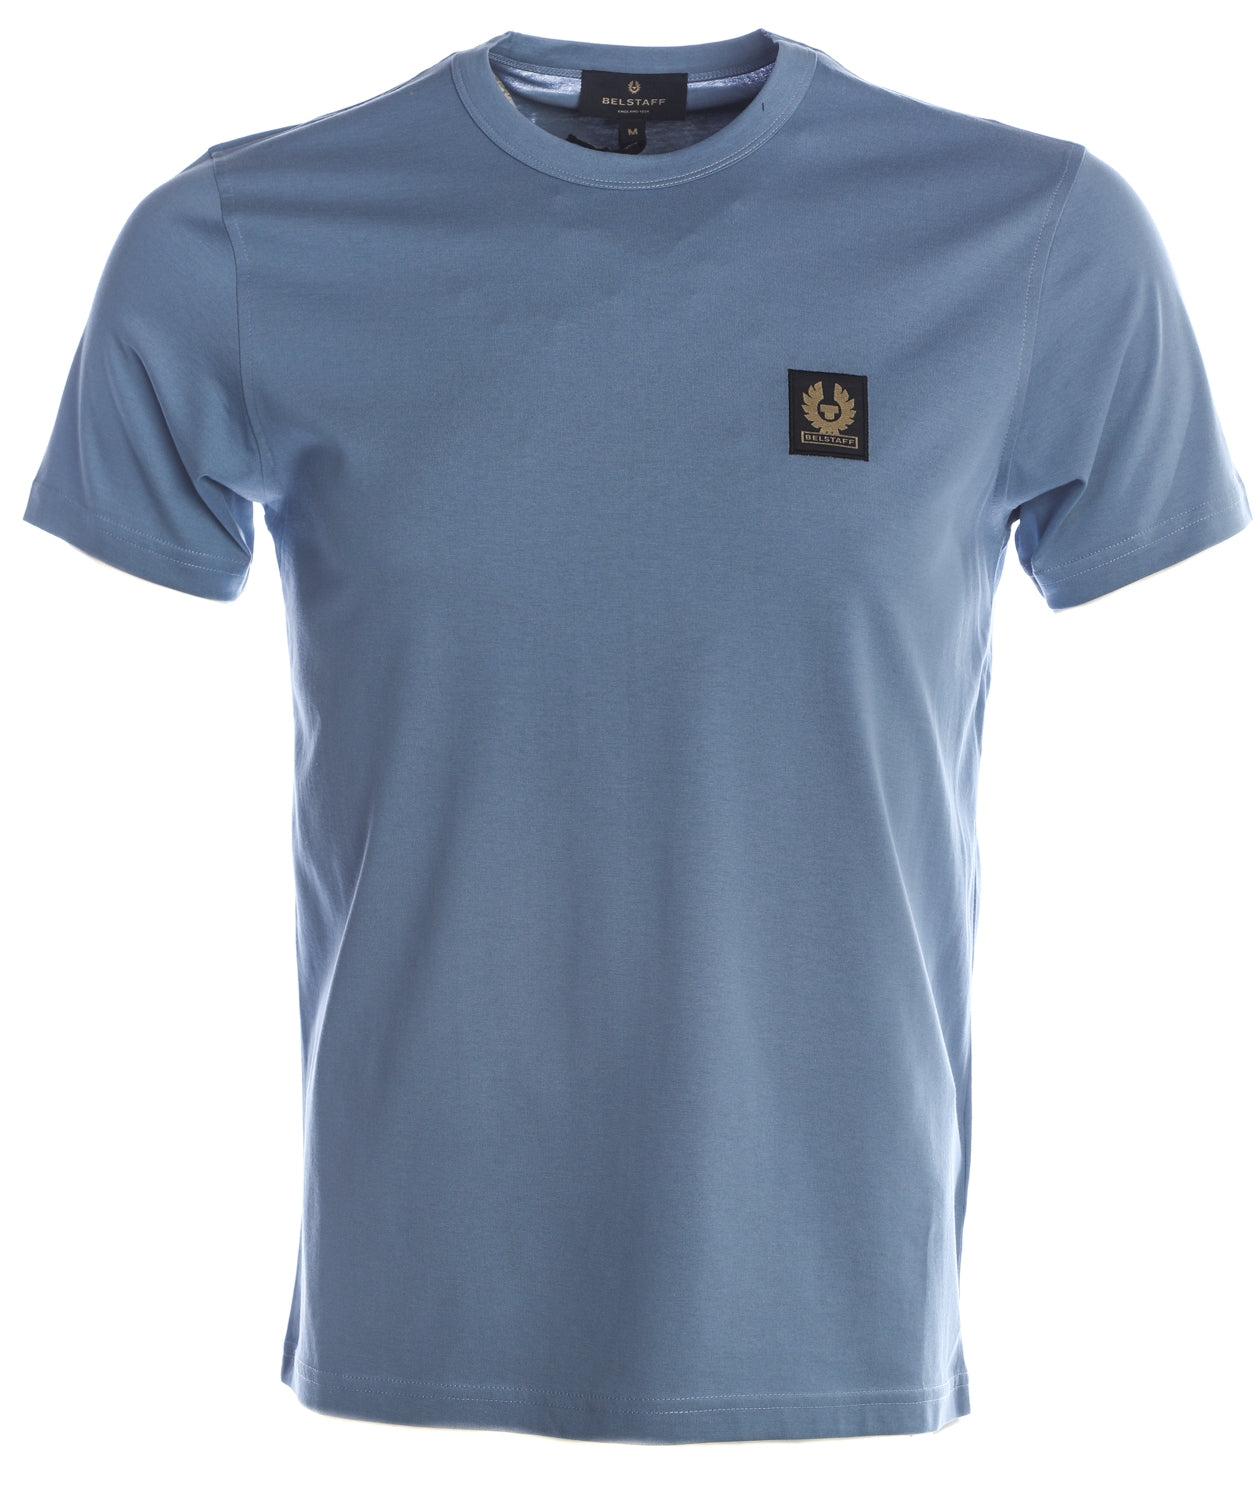 Belstaff Classic T-Shirt in Airforce Blue